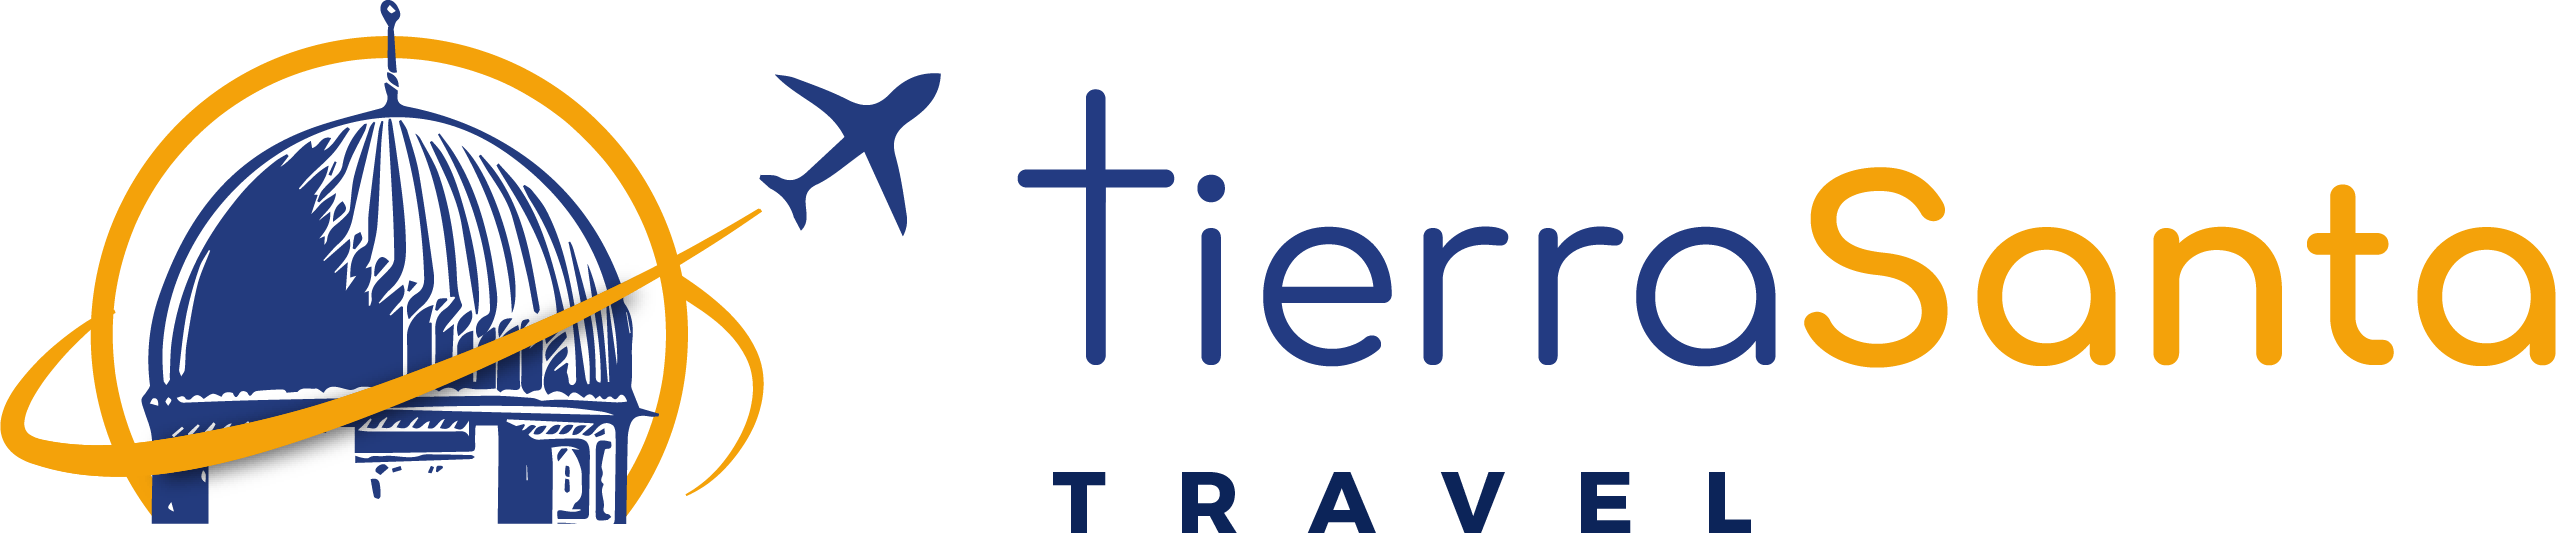 Tierra Santa Travel